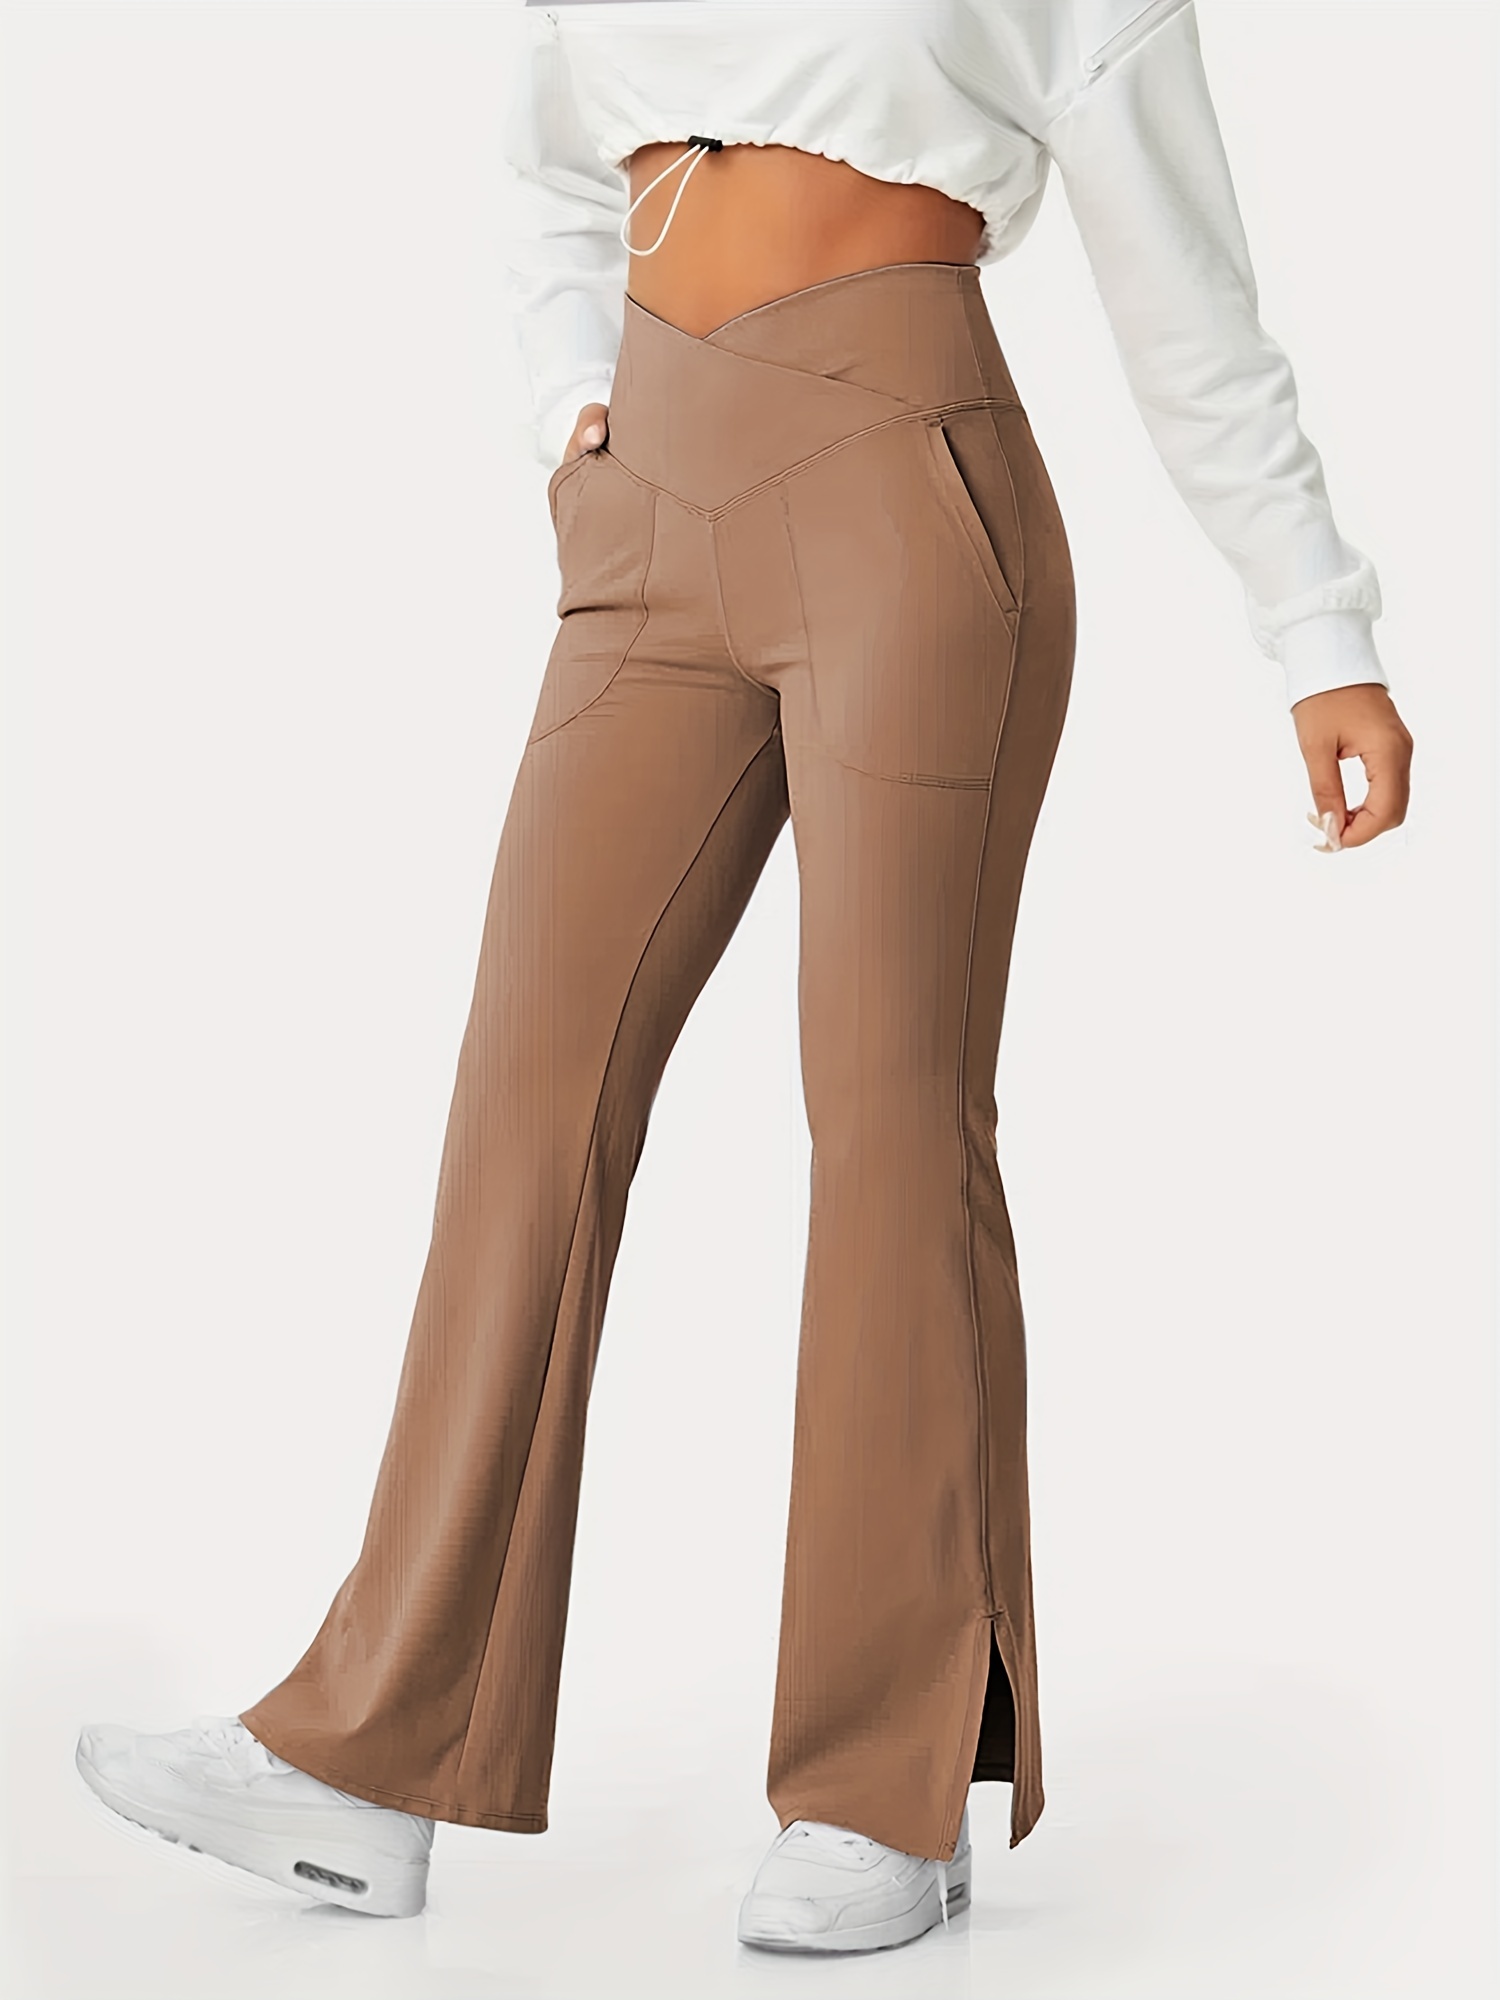 CAICJ98 Pants for Women Women's High Waist Slit Hem Pants Plain Flare Leg Yoga  Pants Brown,L 